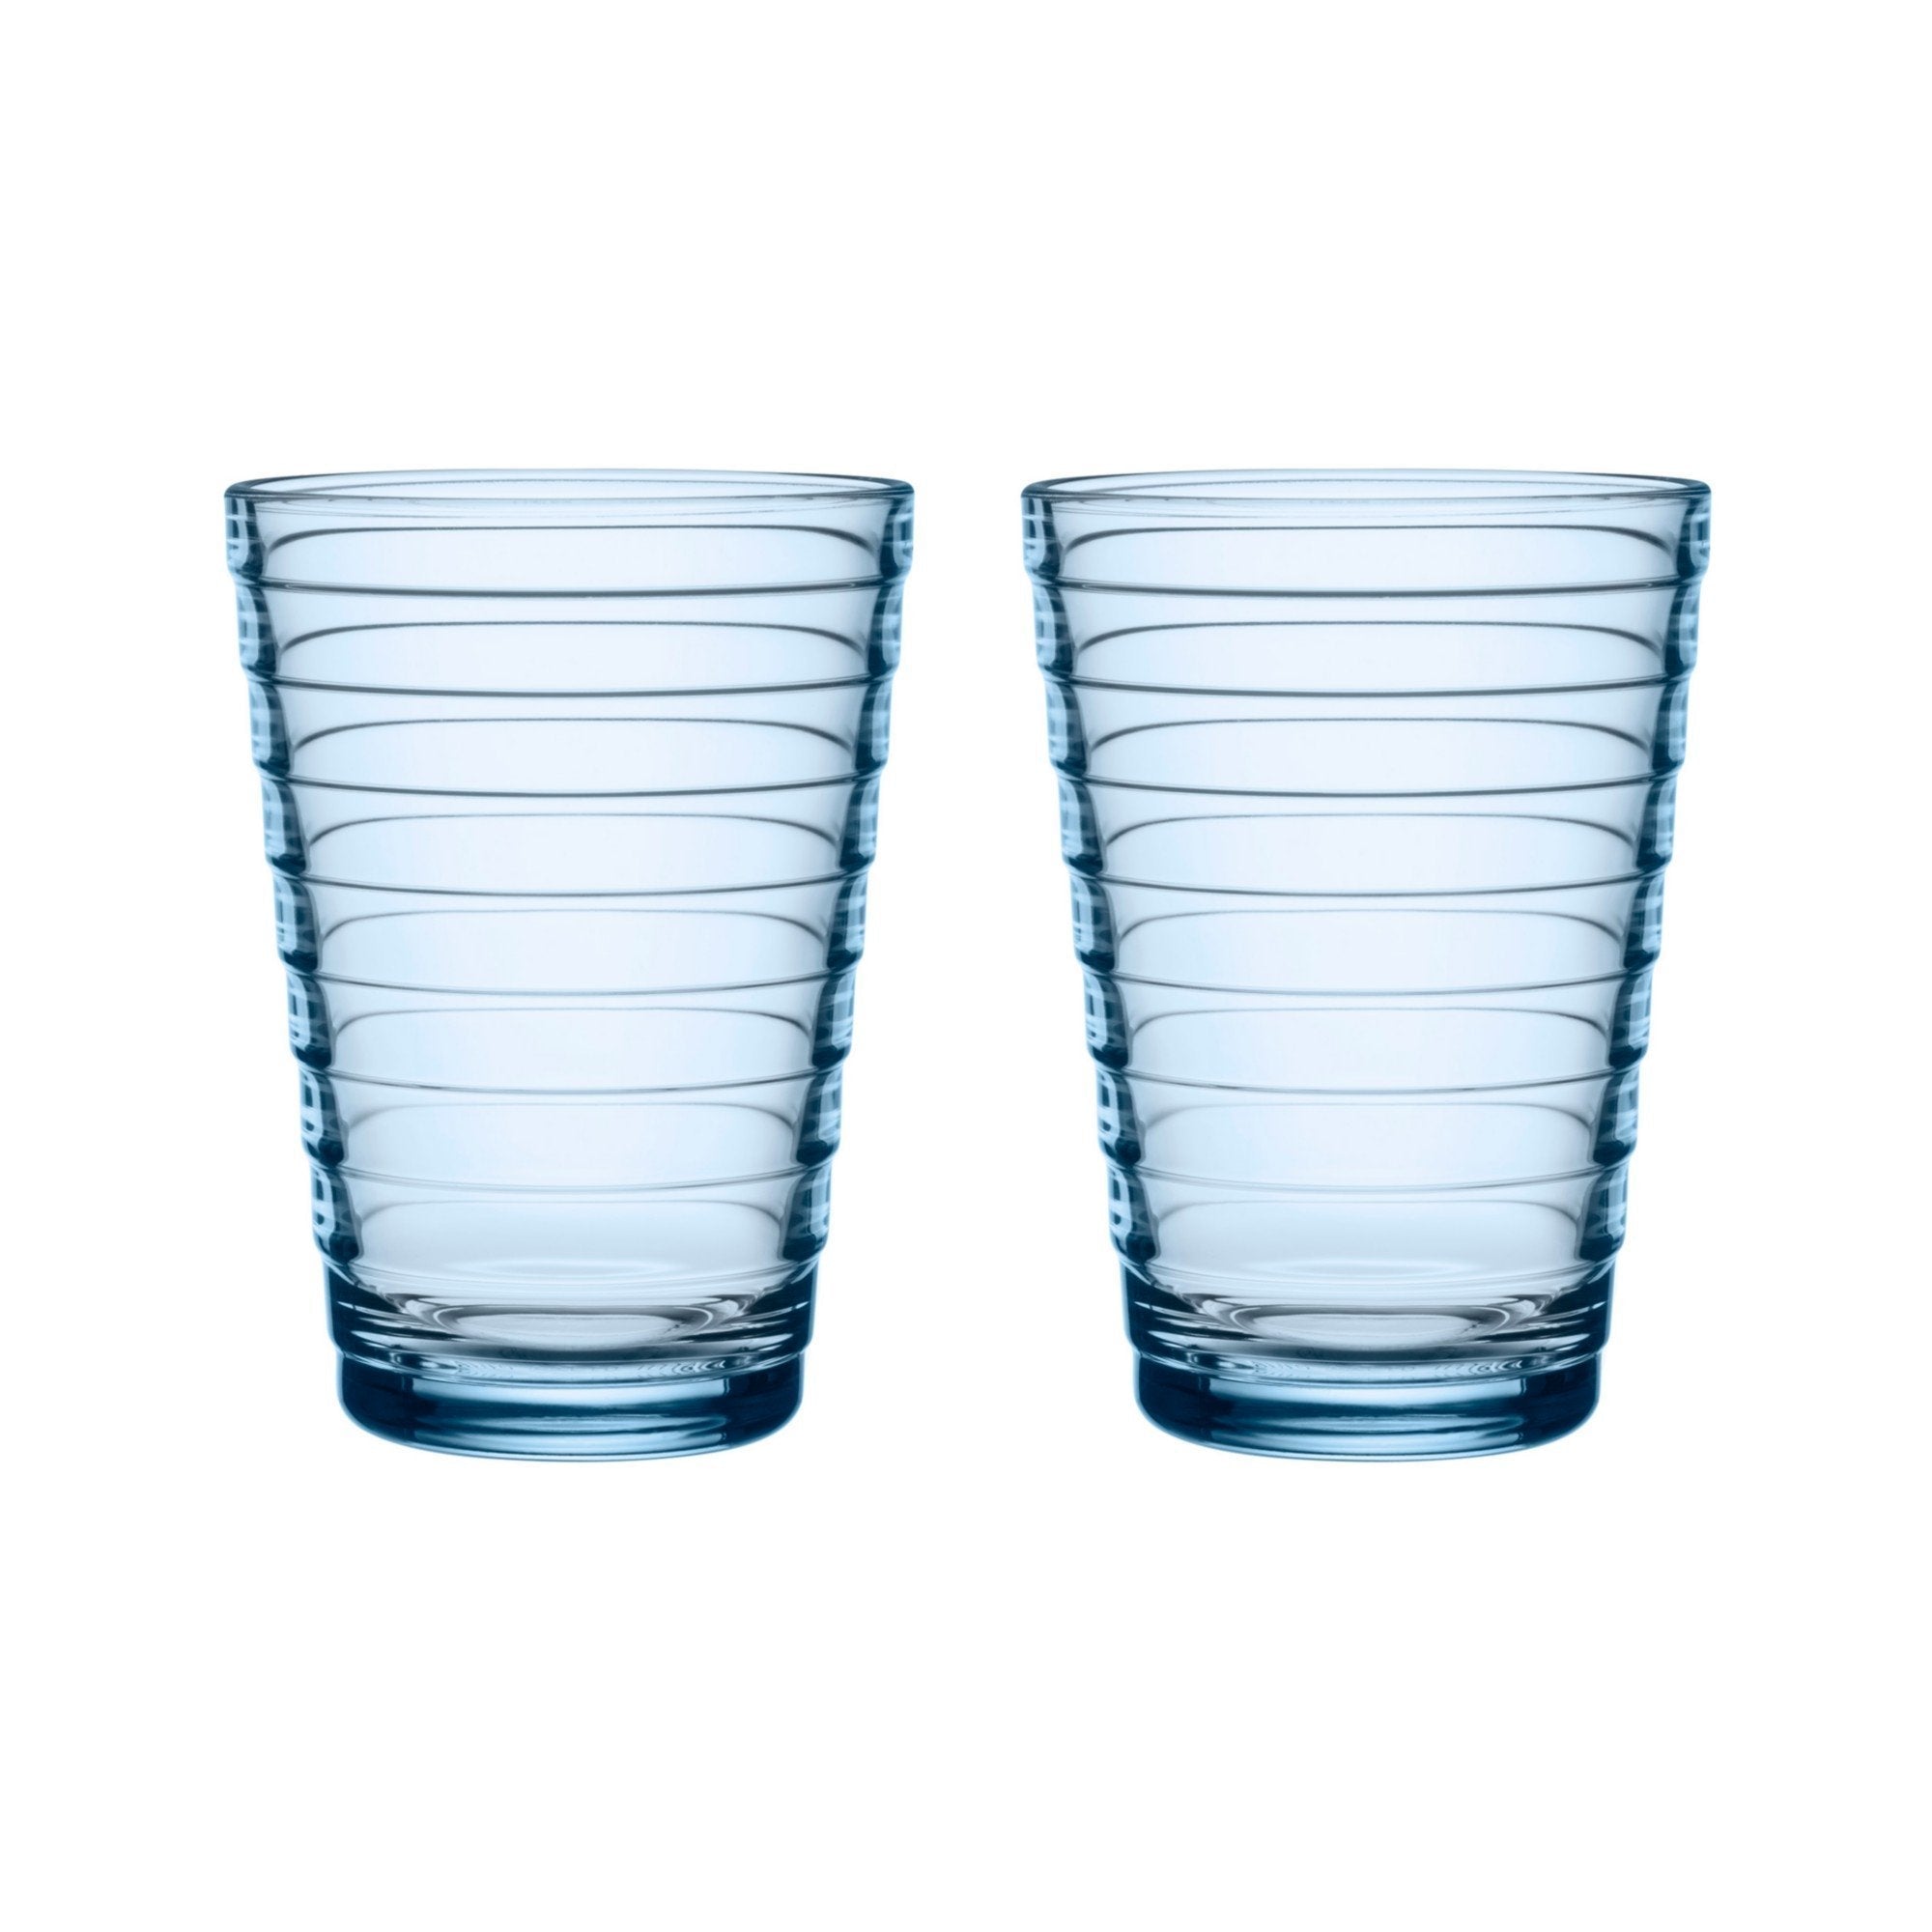 Iittala Aino Aalto Drinking Glass Aqua 33cl, 2pcs.